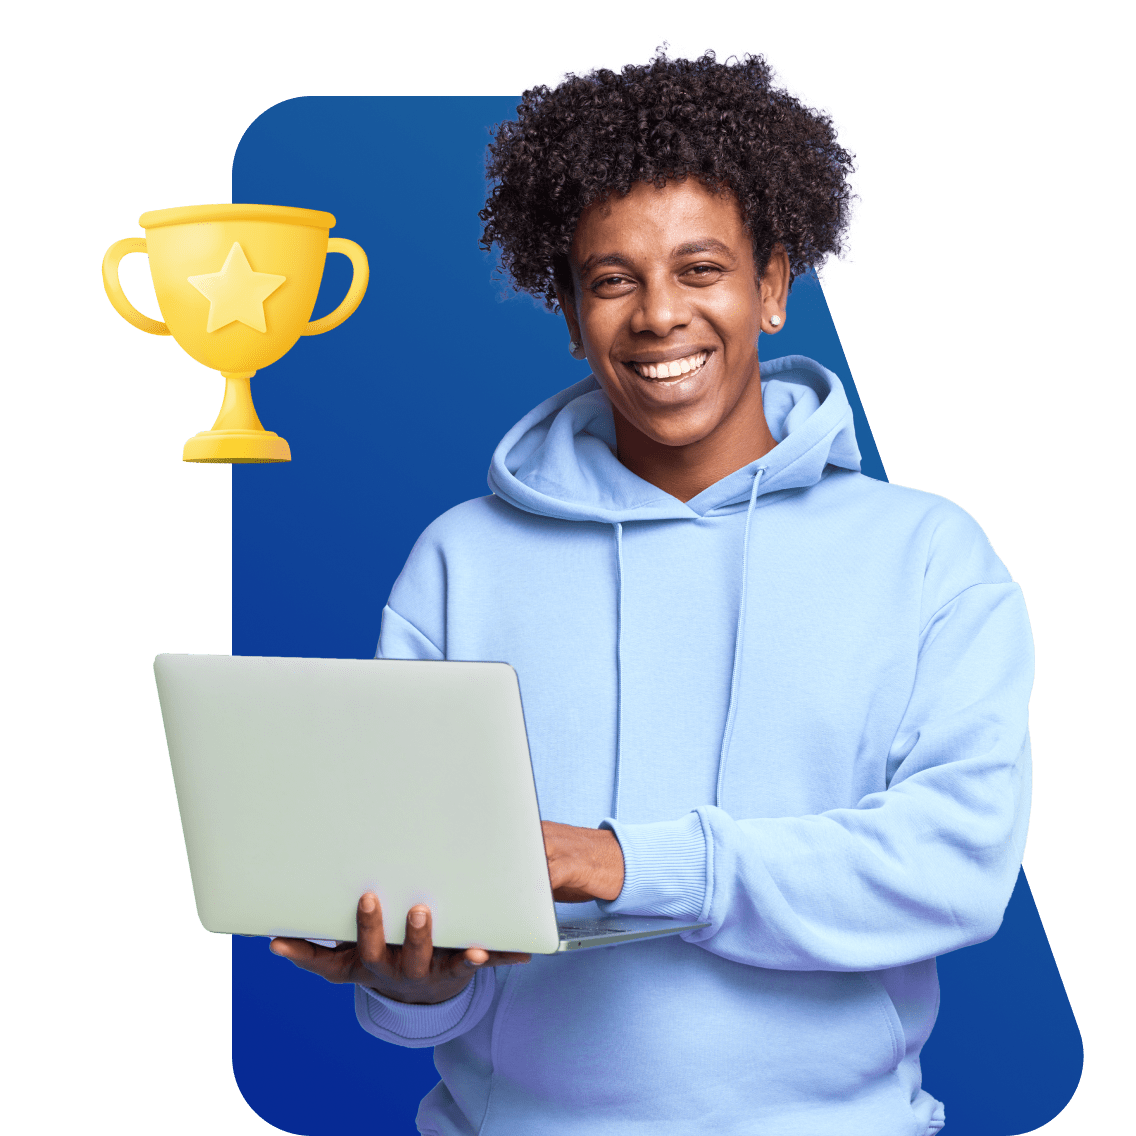 Missouri Online Schools image 1 (name 1 Young Man Laptop Blue Hoodie Award)